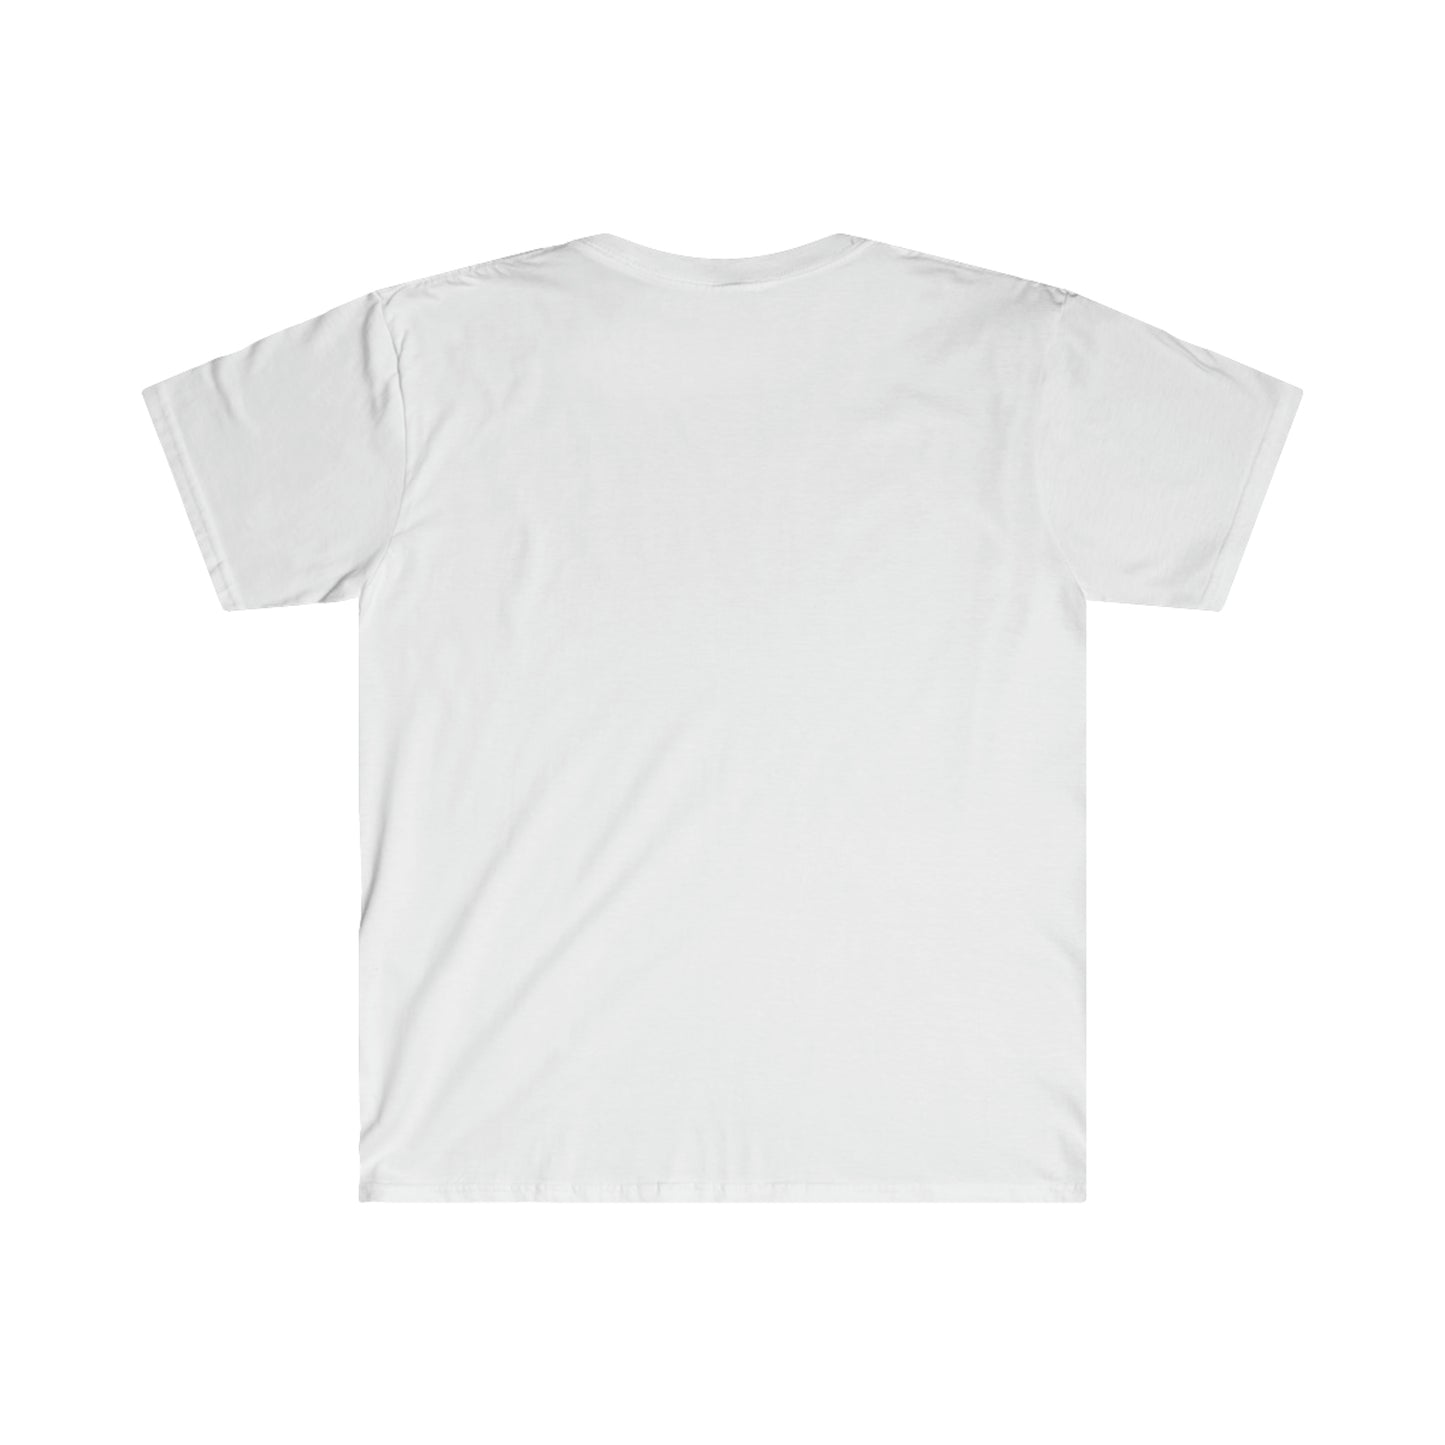 Karate Coffee T-Shirt